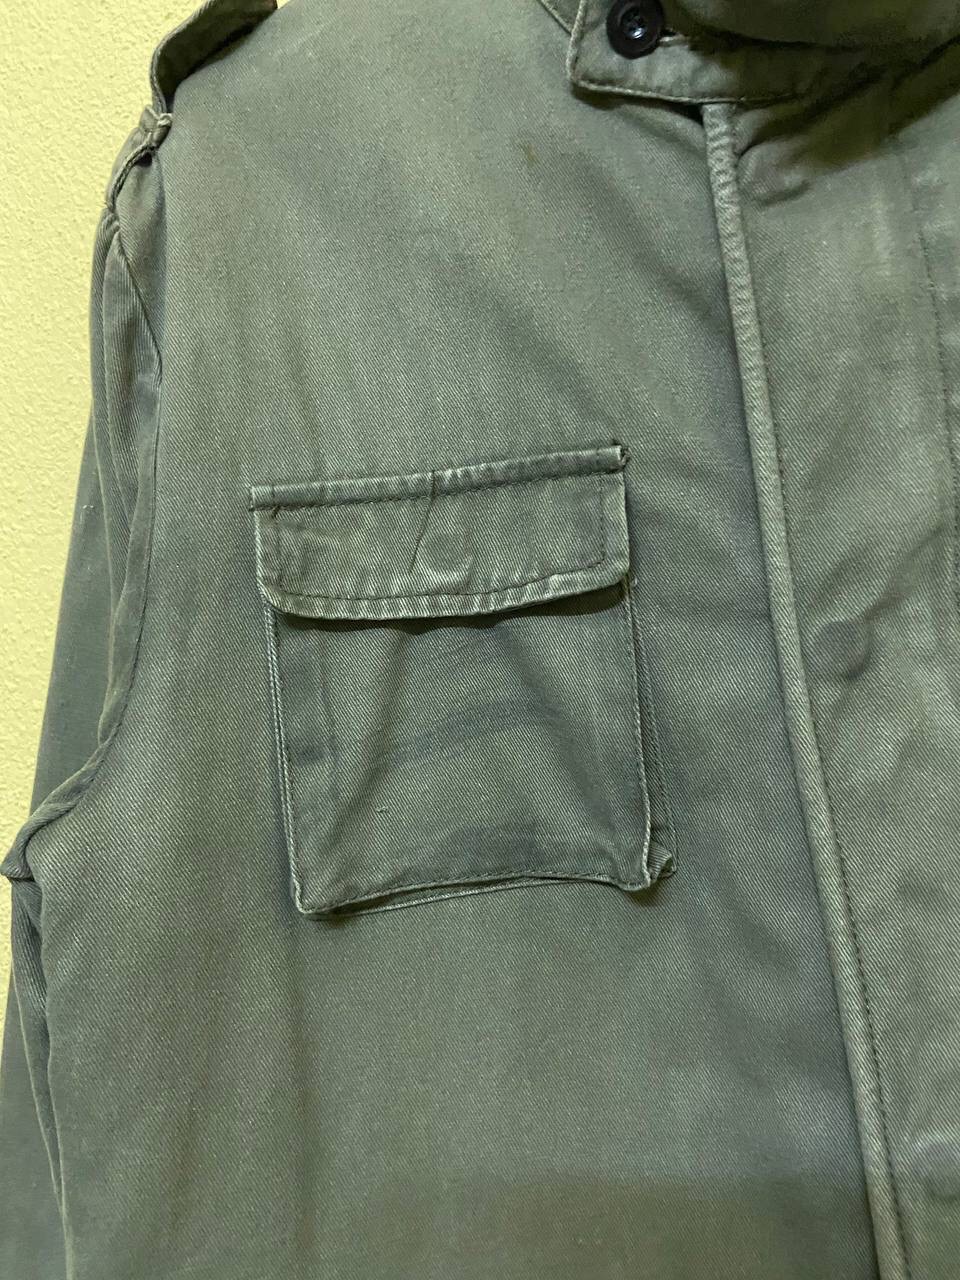 N Hollywood Fishtail Army Jacket - 5